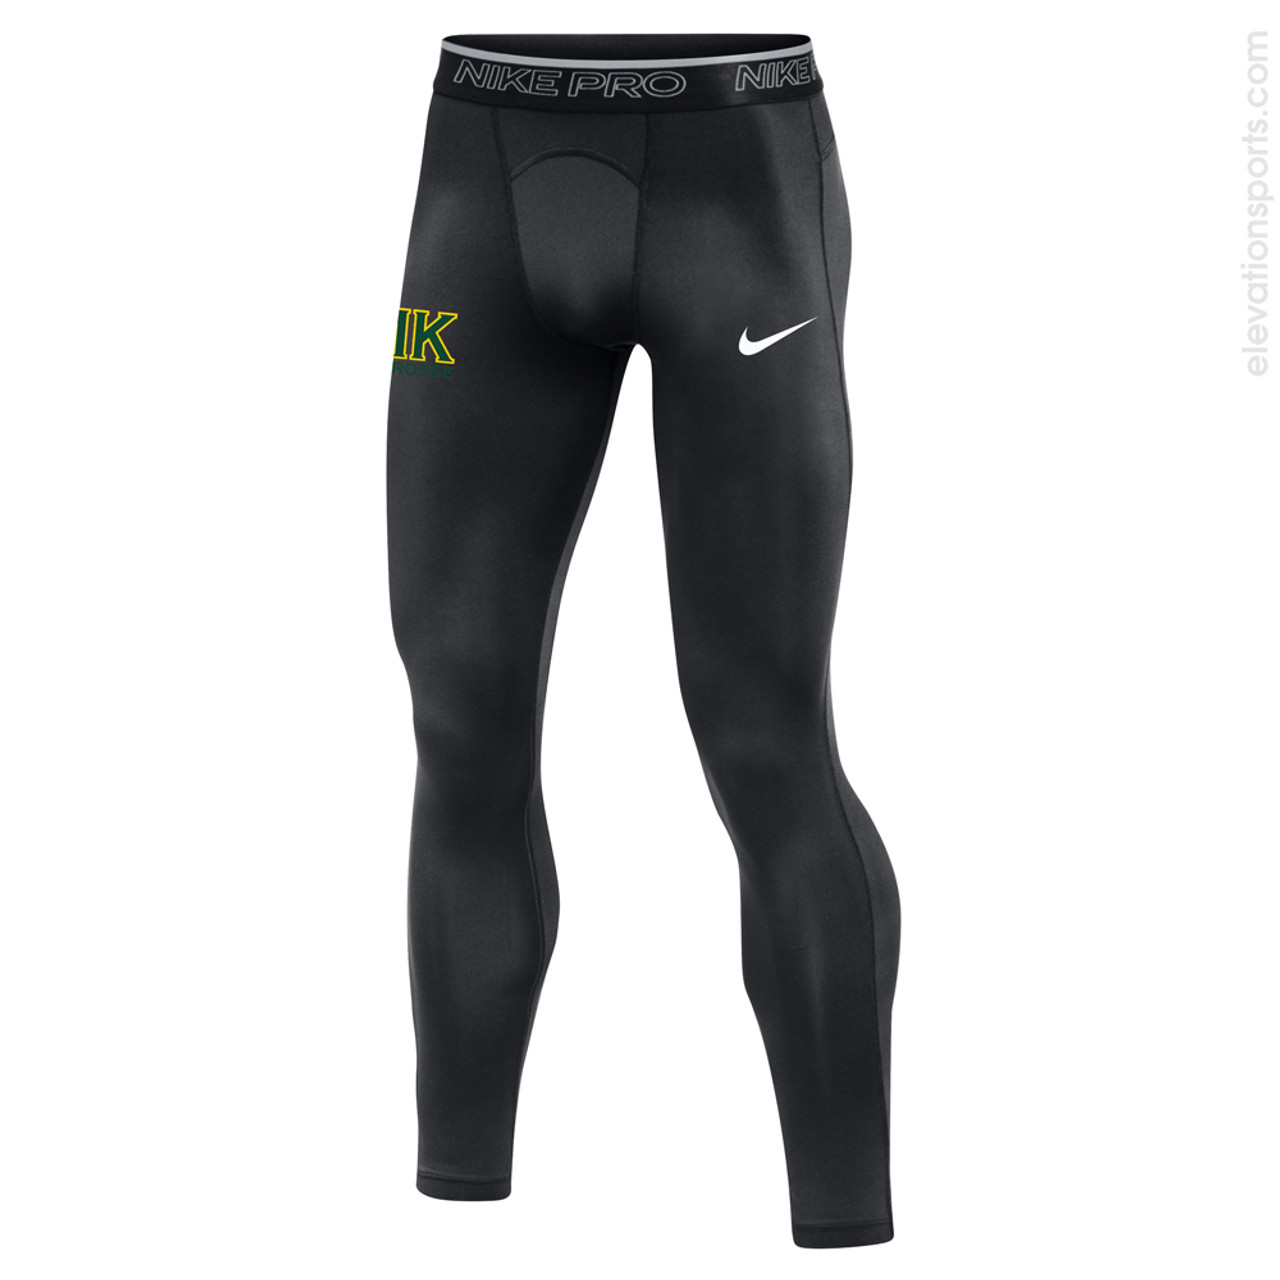  Nike Pro Strong Leg Sleeves Black, White LG